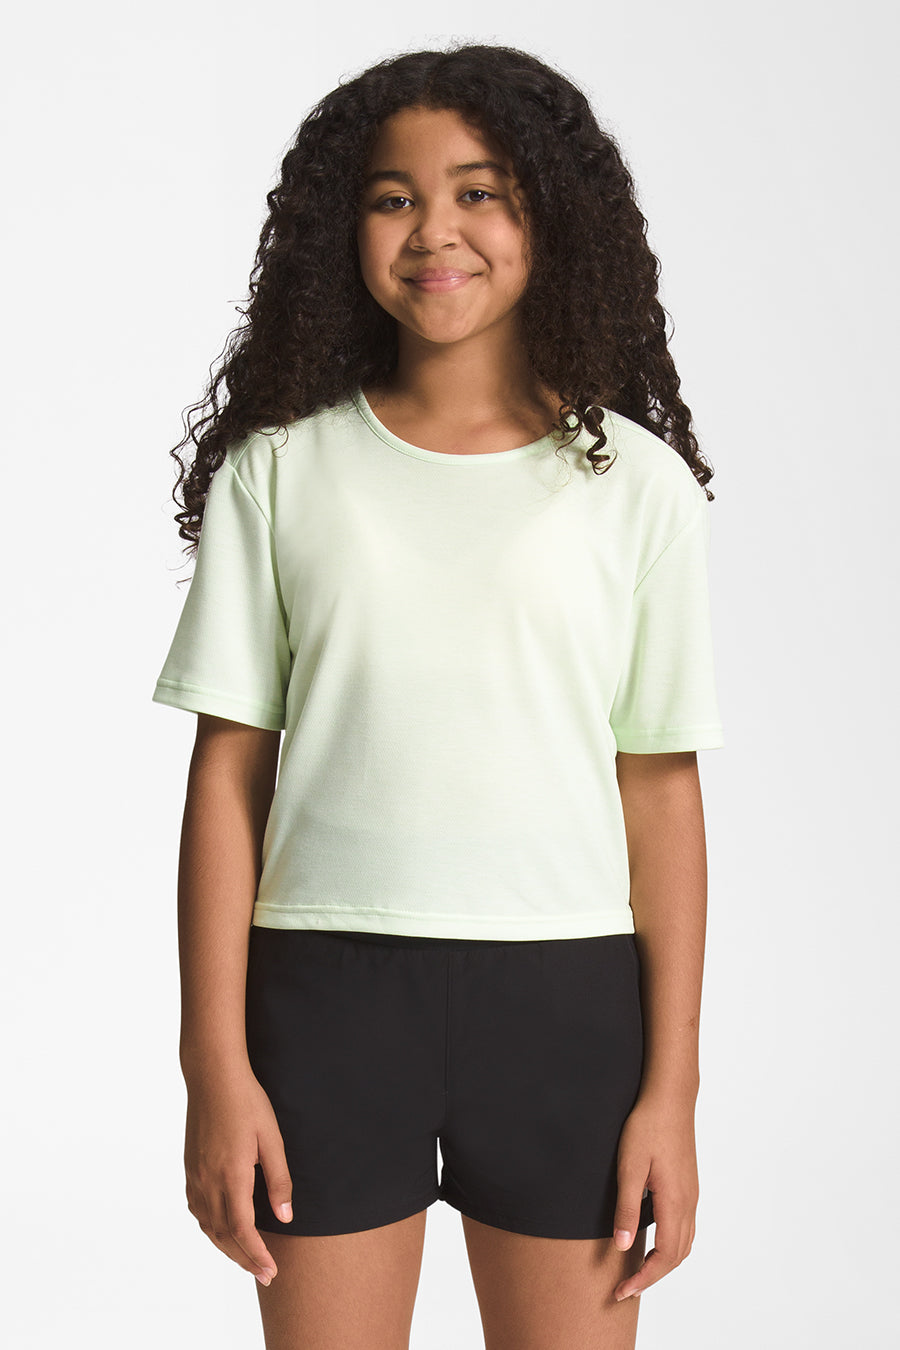 Zich afvragen Fietstaxi Makkelijk te begrijpen Girls Shirt North Face Sports Boxy Lime Cream – Mini Ruby